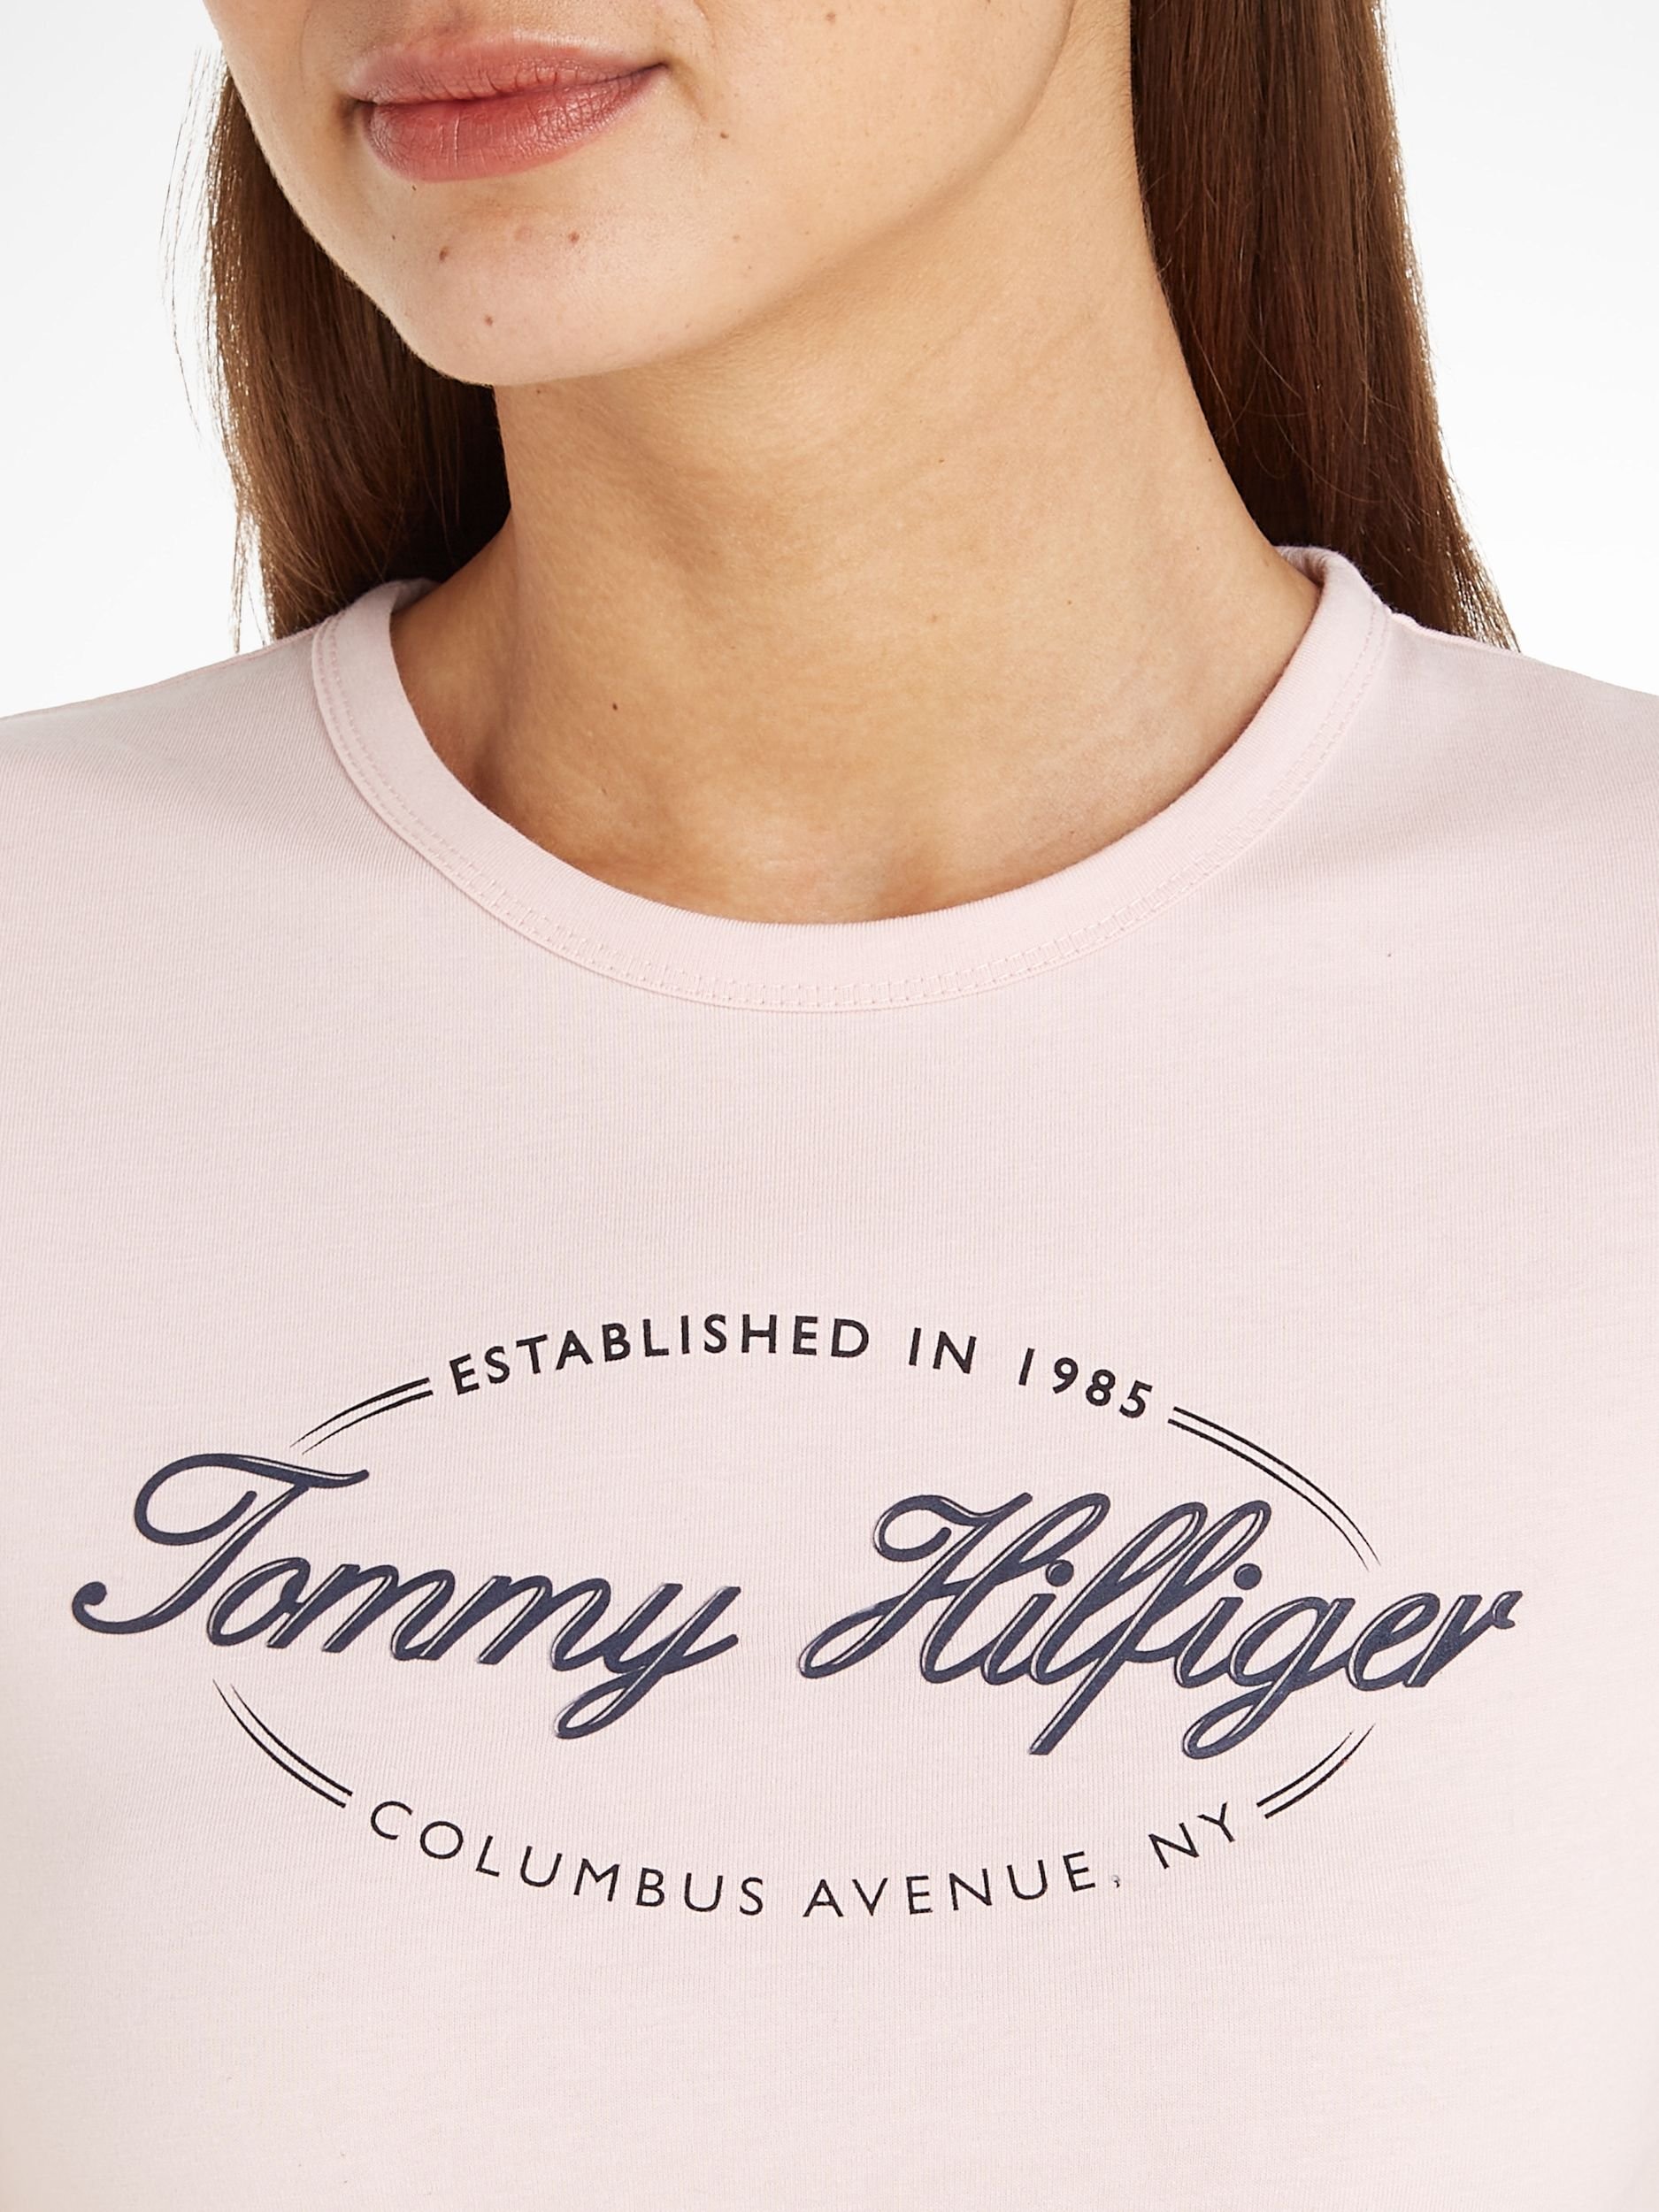 Tommy Hilfiger Shirt 